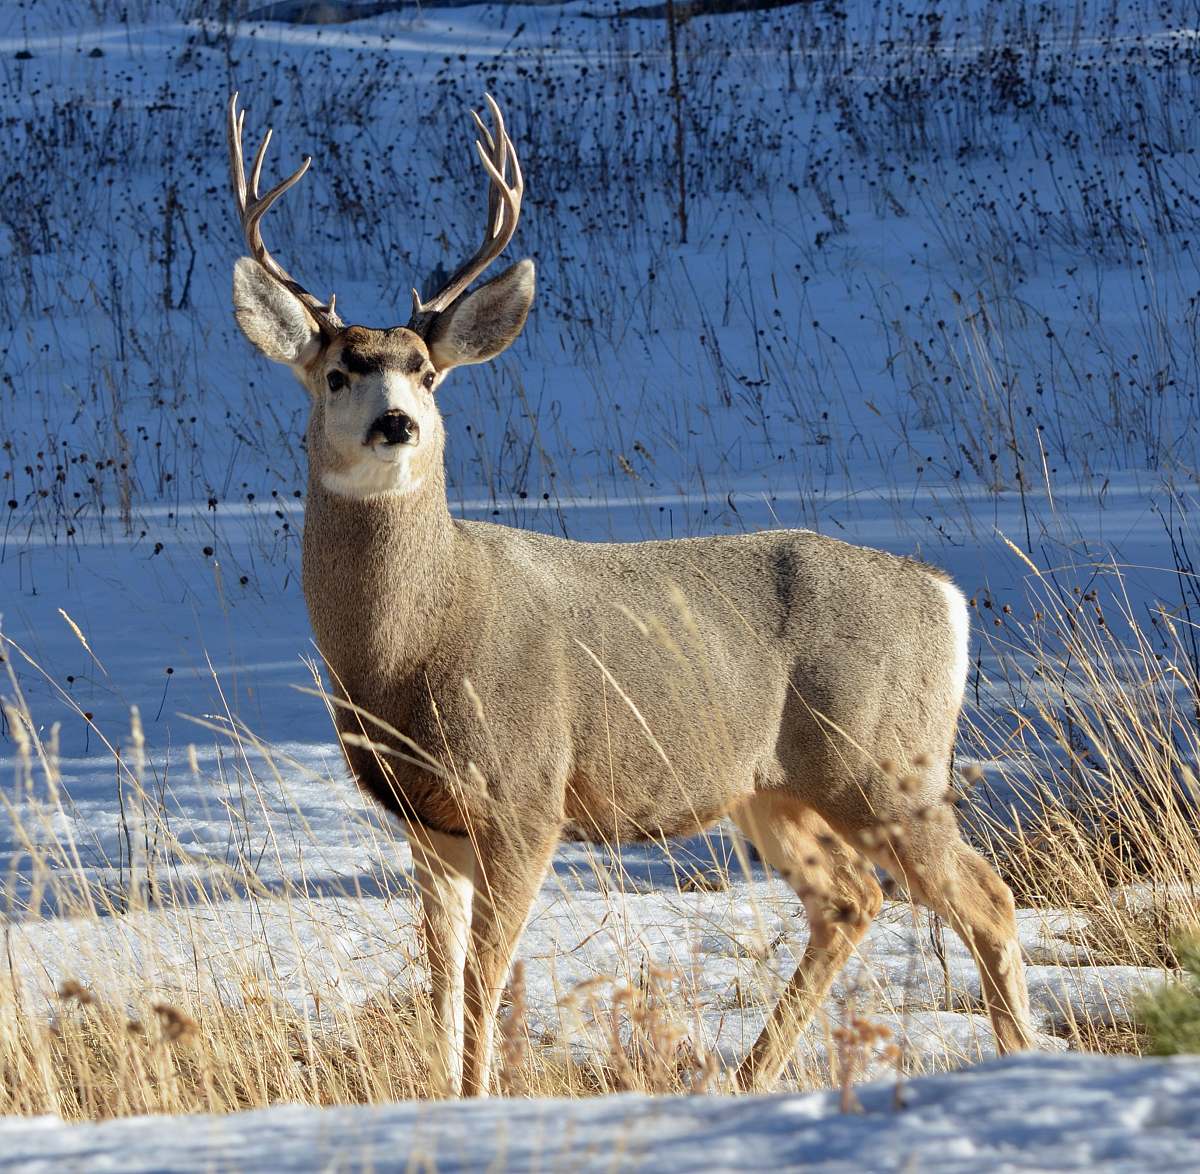 Deer Gray And White Deer On Snow Field Wildlife Image Free Photo